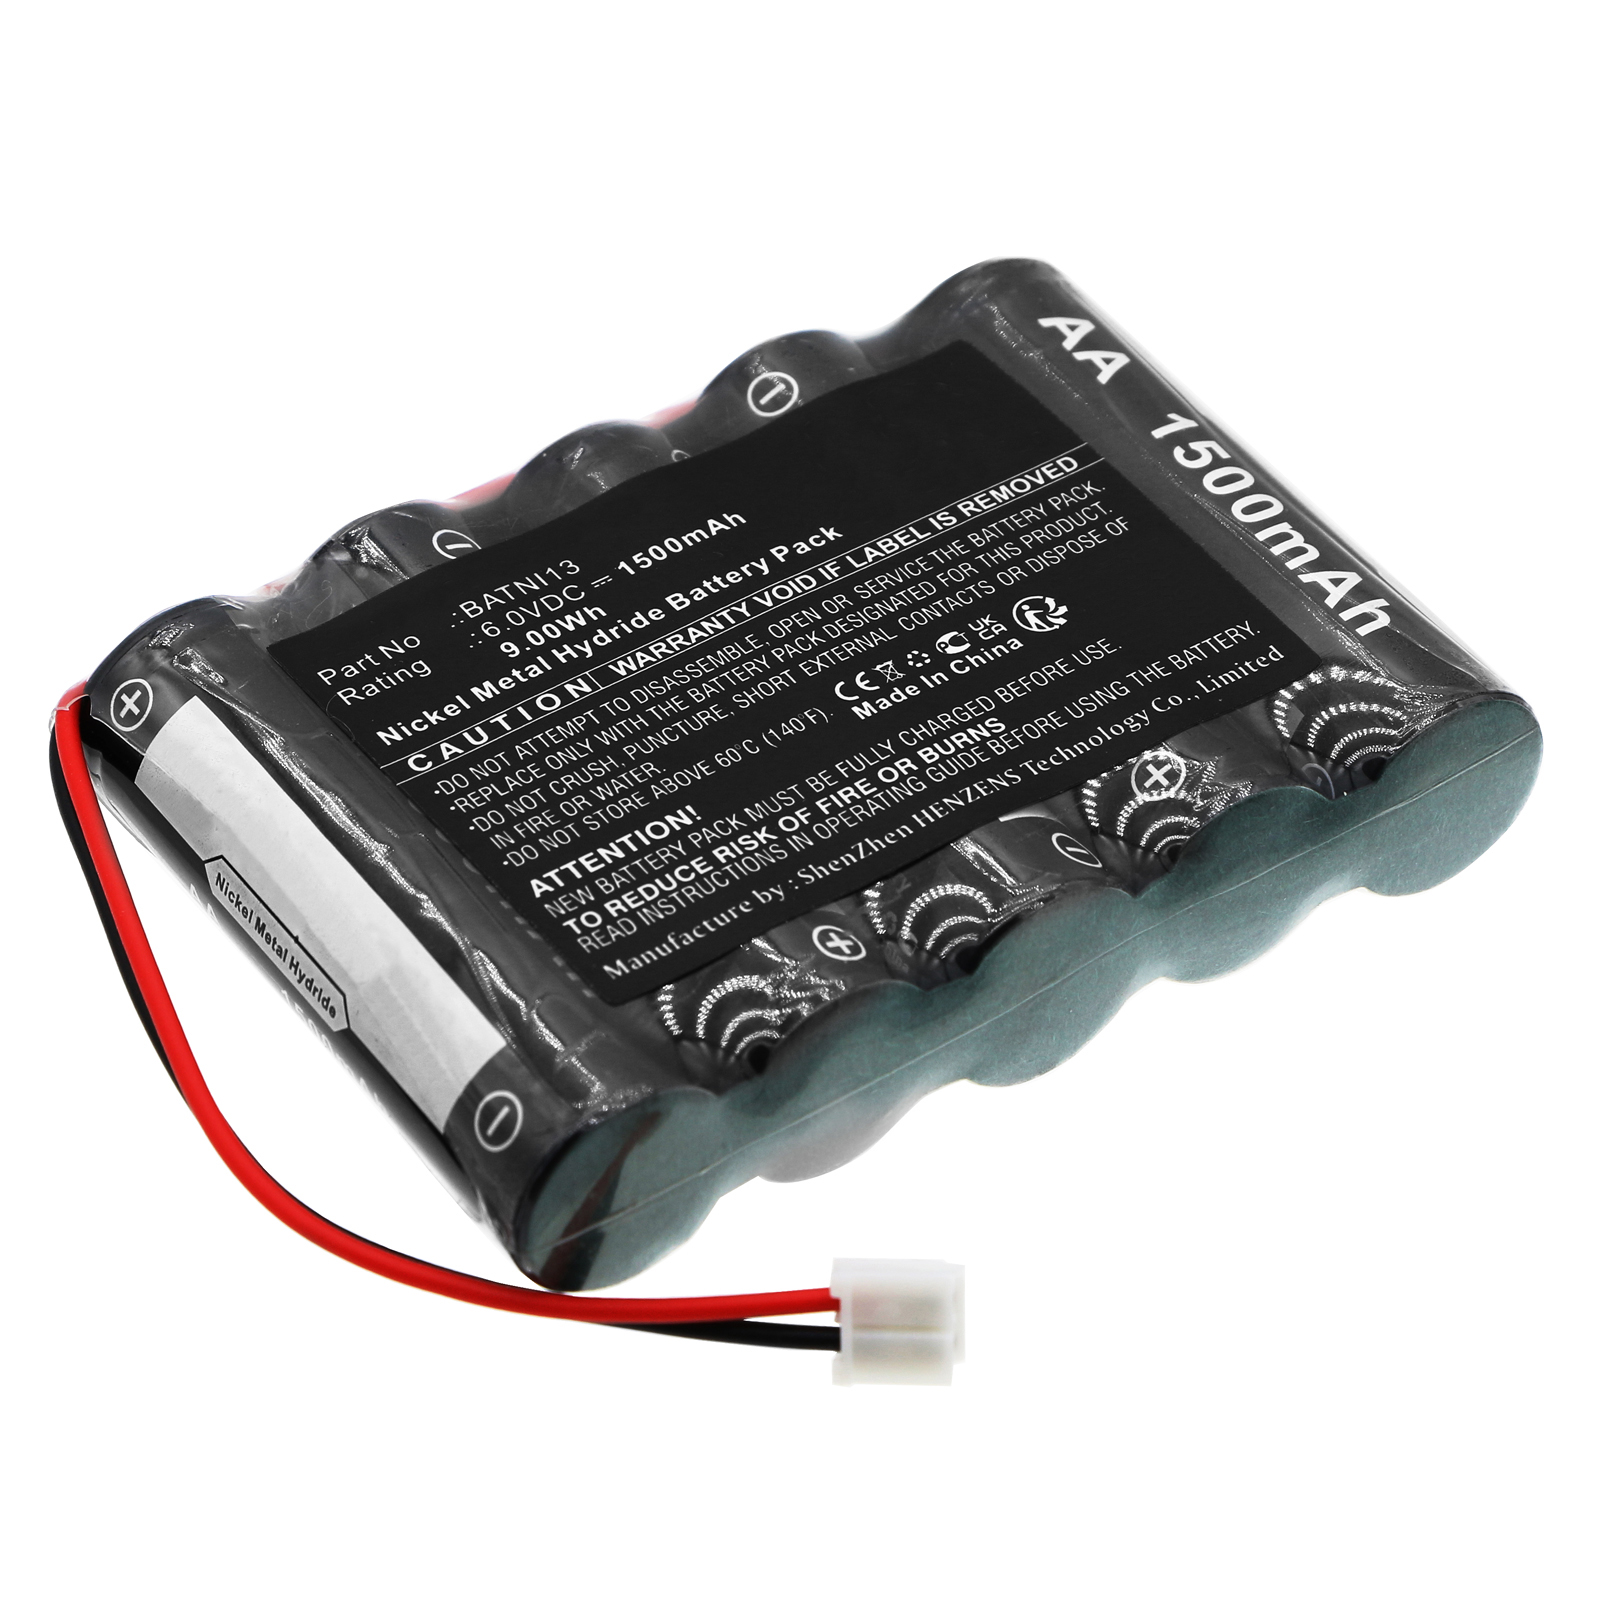 Synergy Digital Alarm System Battery, Compatible with DAITEM BATNI13 Alarm System Battery (Ni-MH, 6V, 1500mAh)